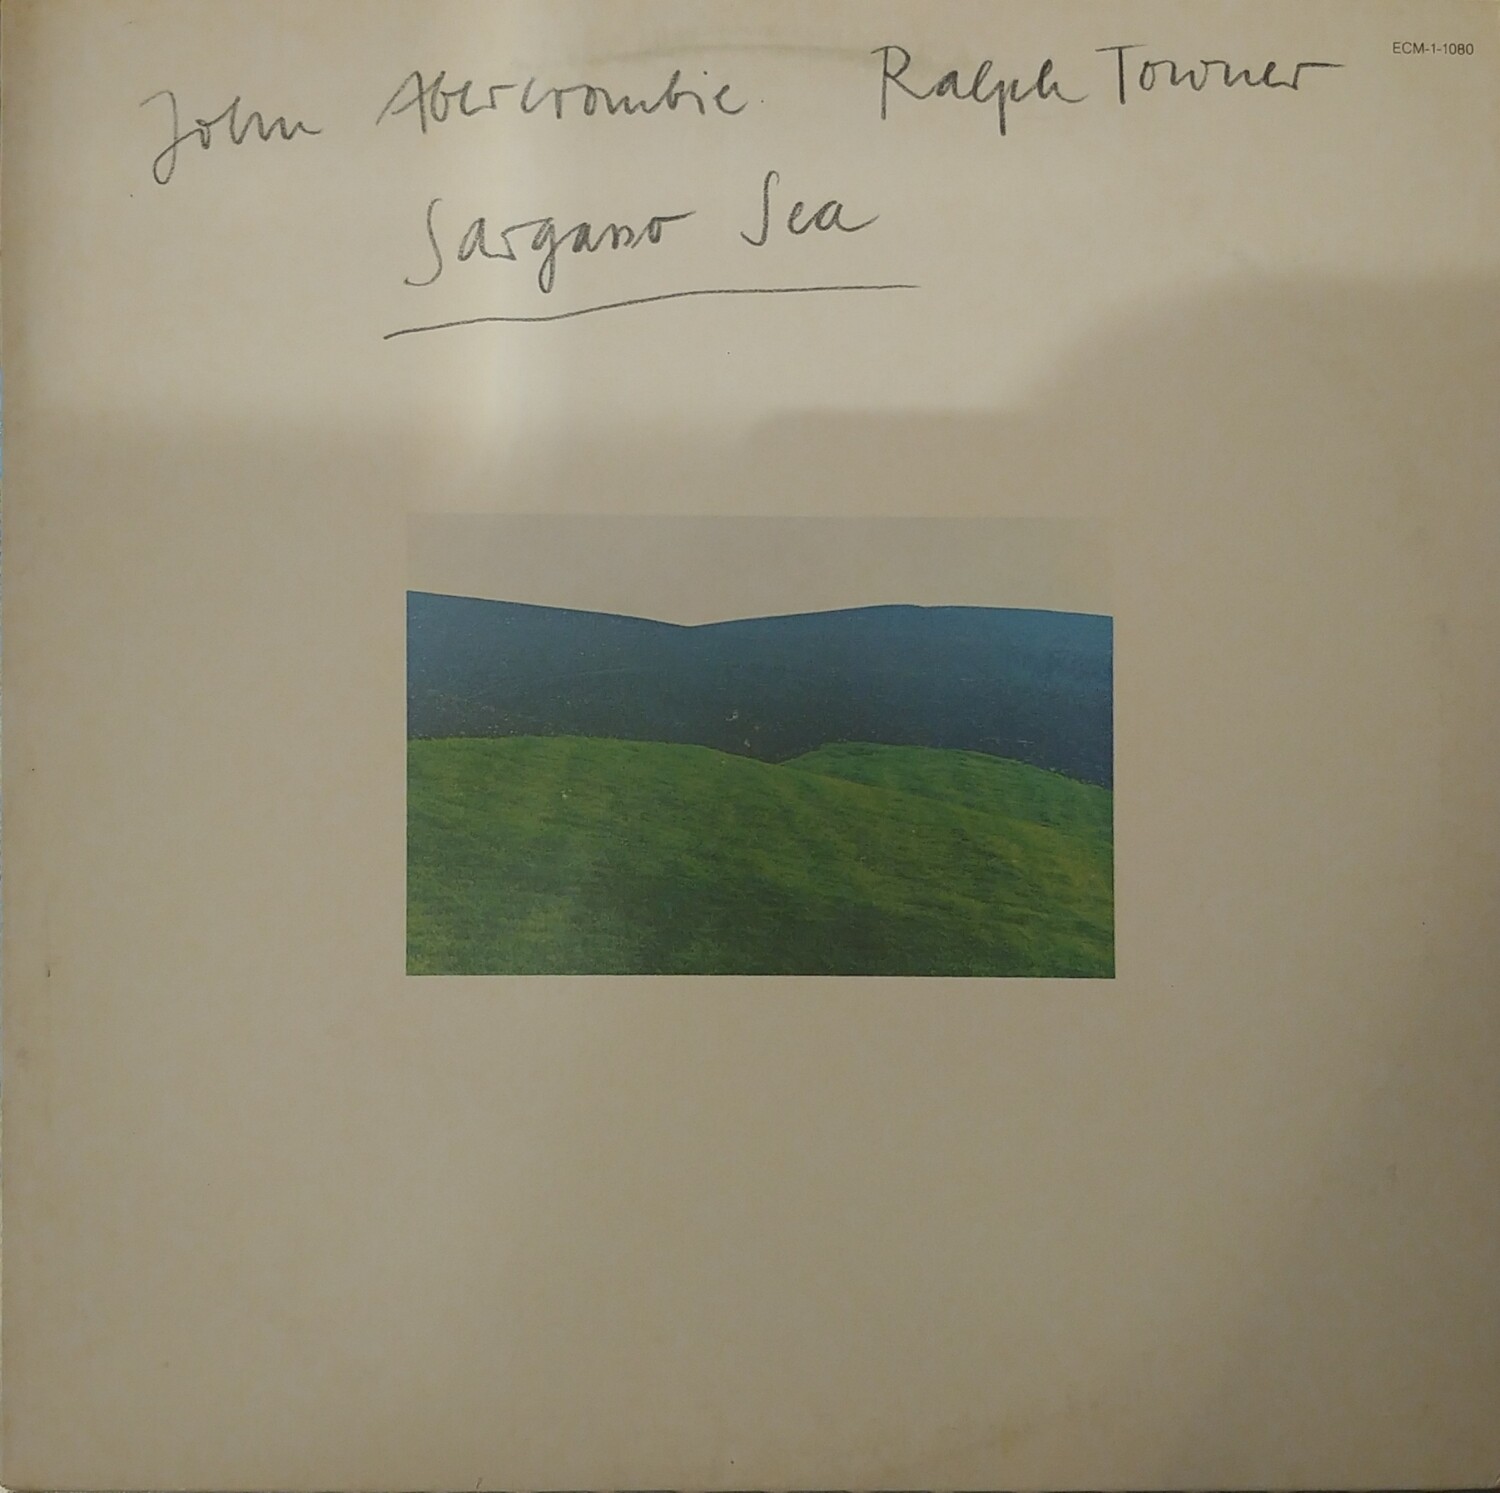 John Abercrombie / Ralph Towner - Sargasso sea